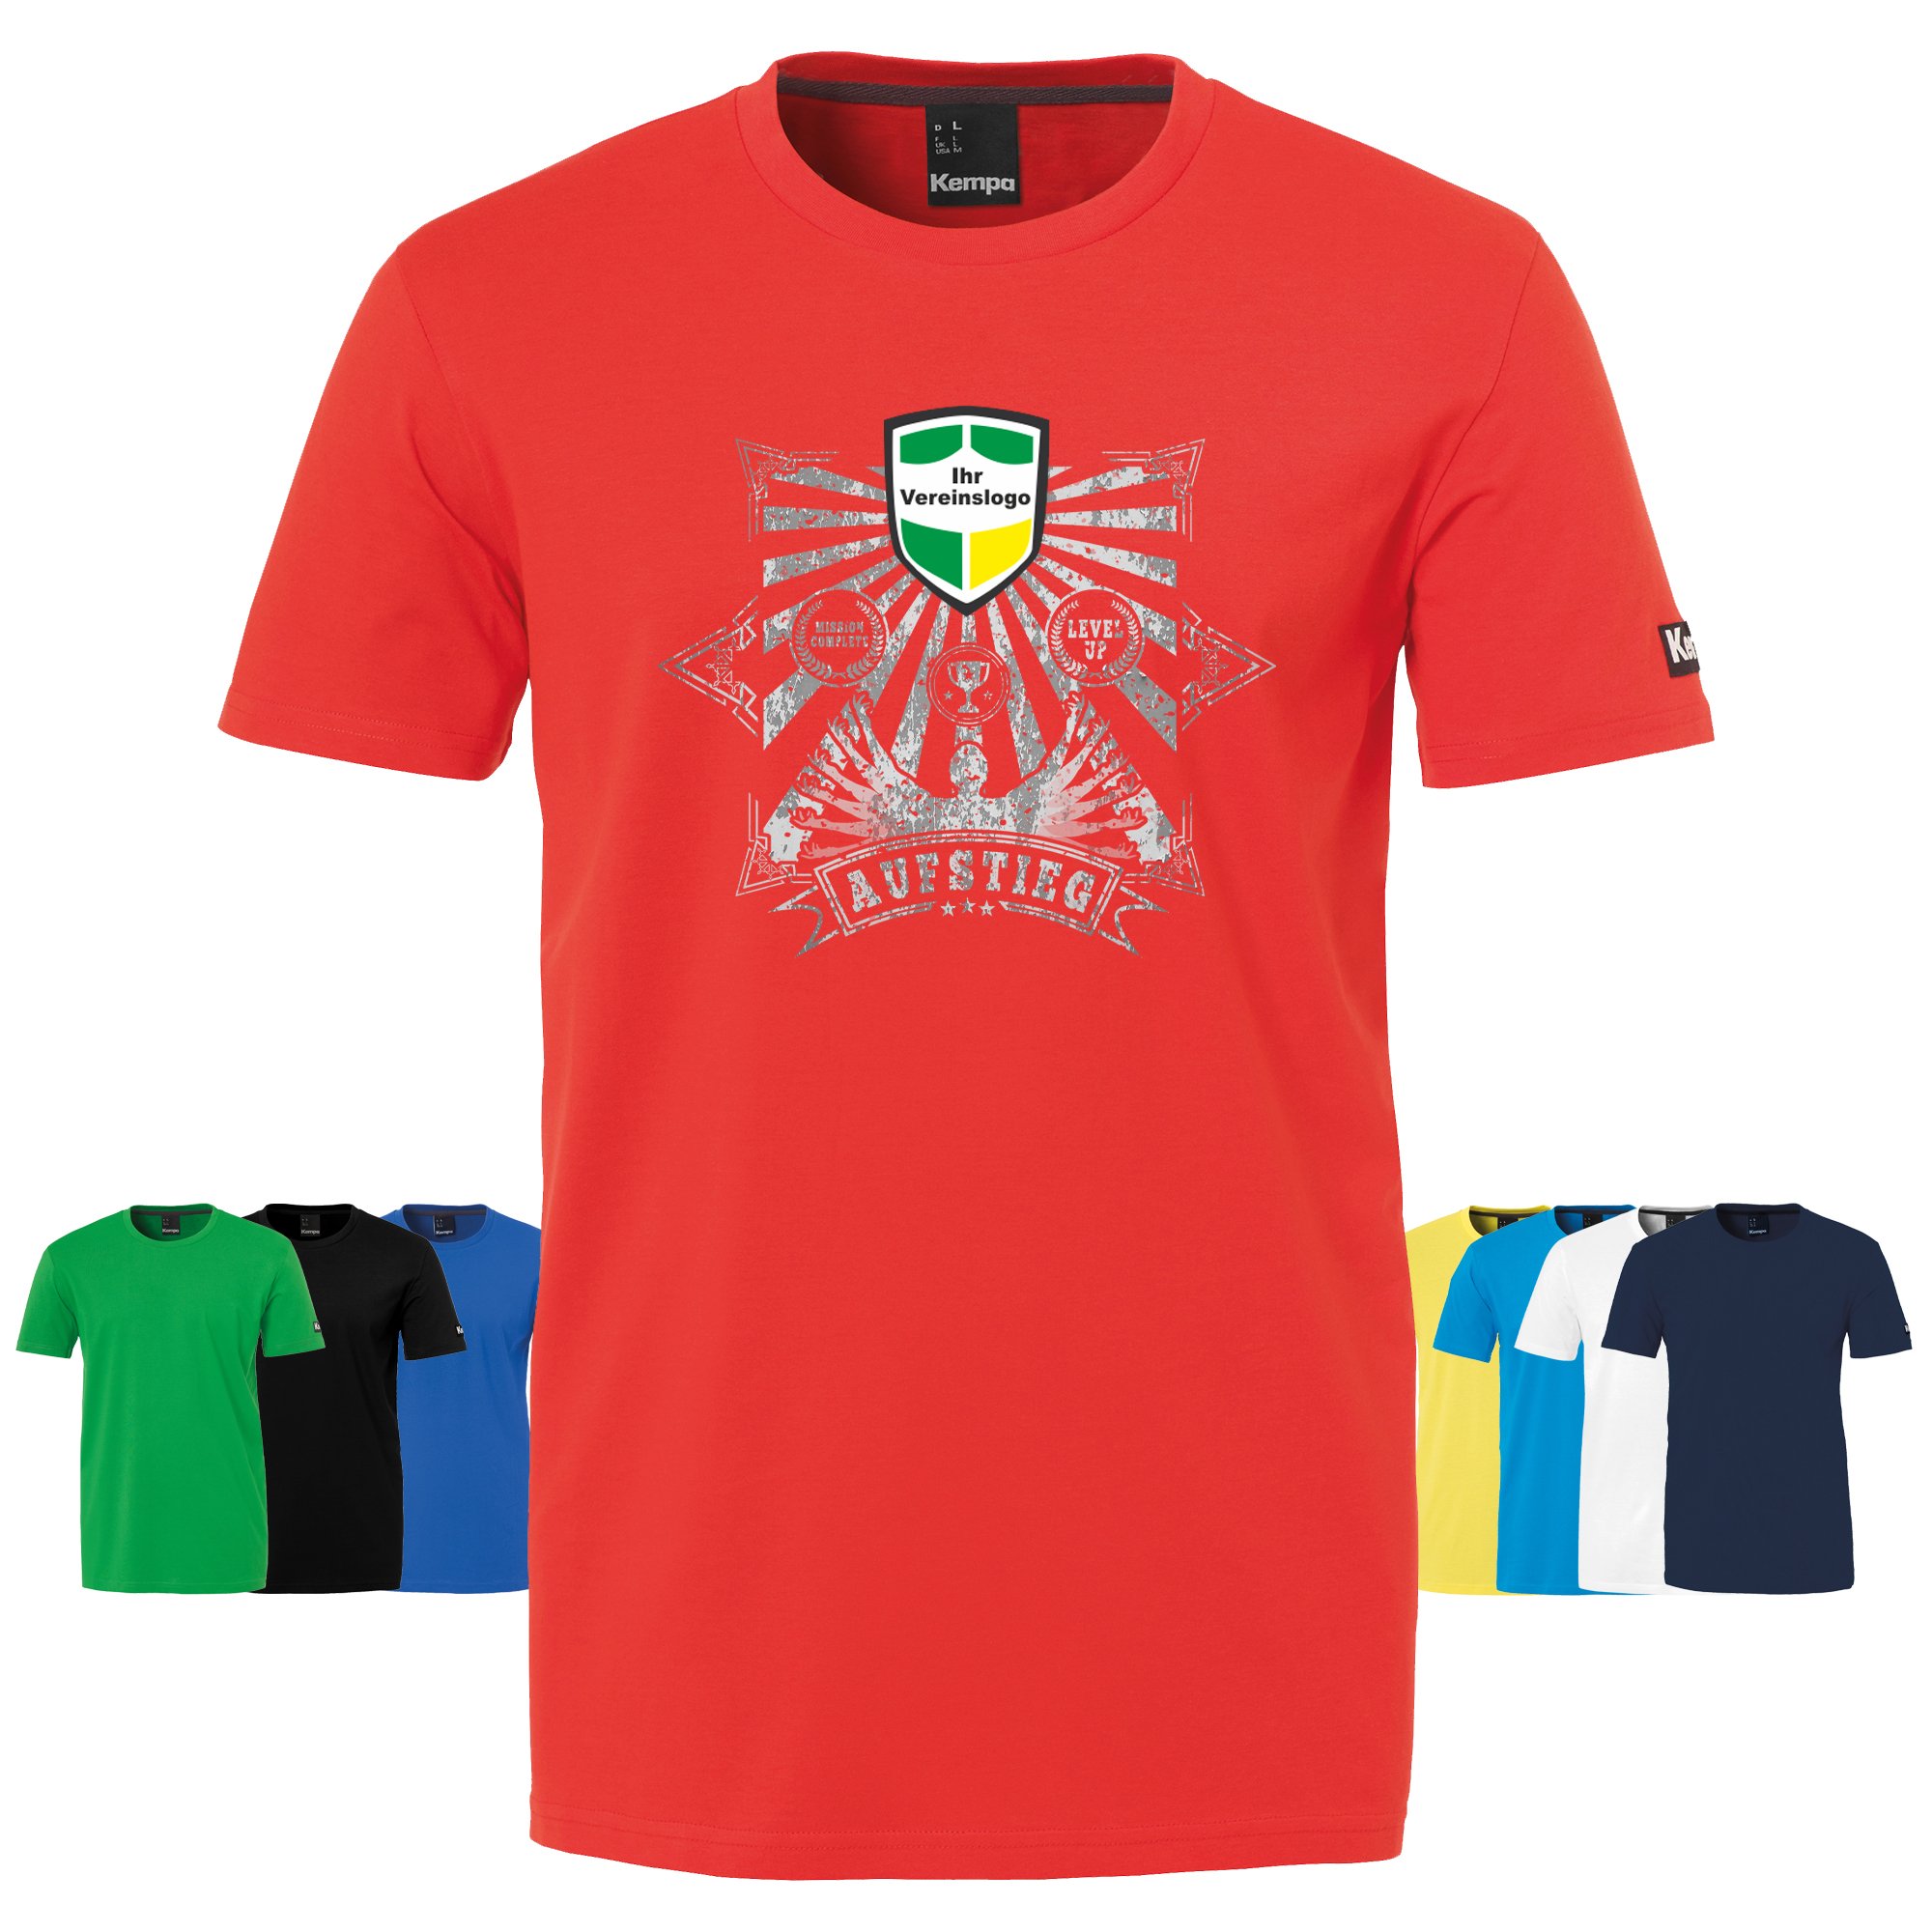 Kempa Aufstieg T-Shirts Team Set